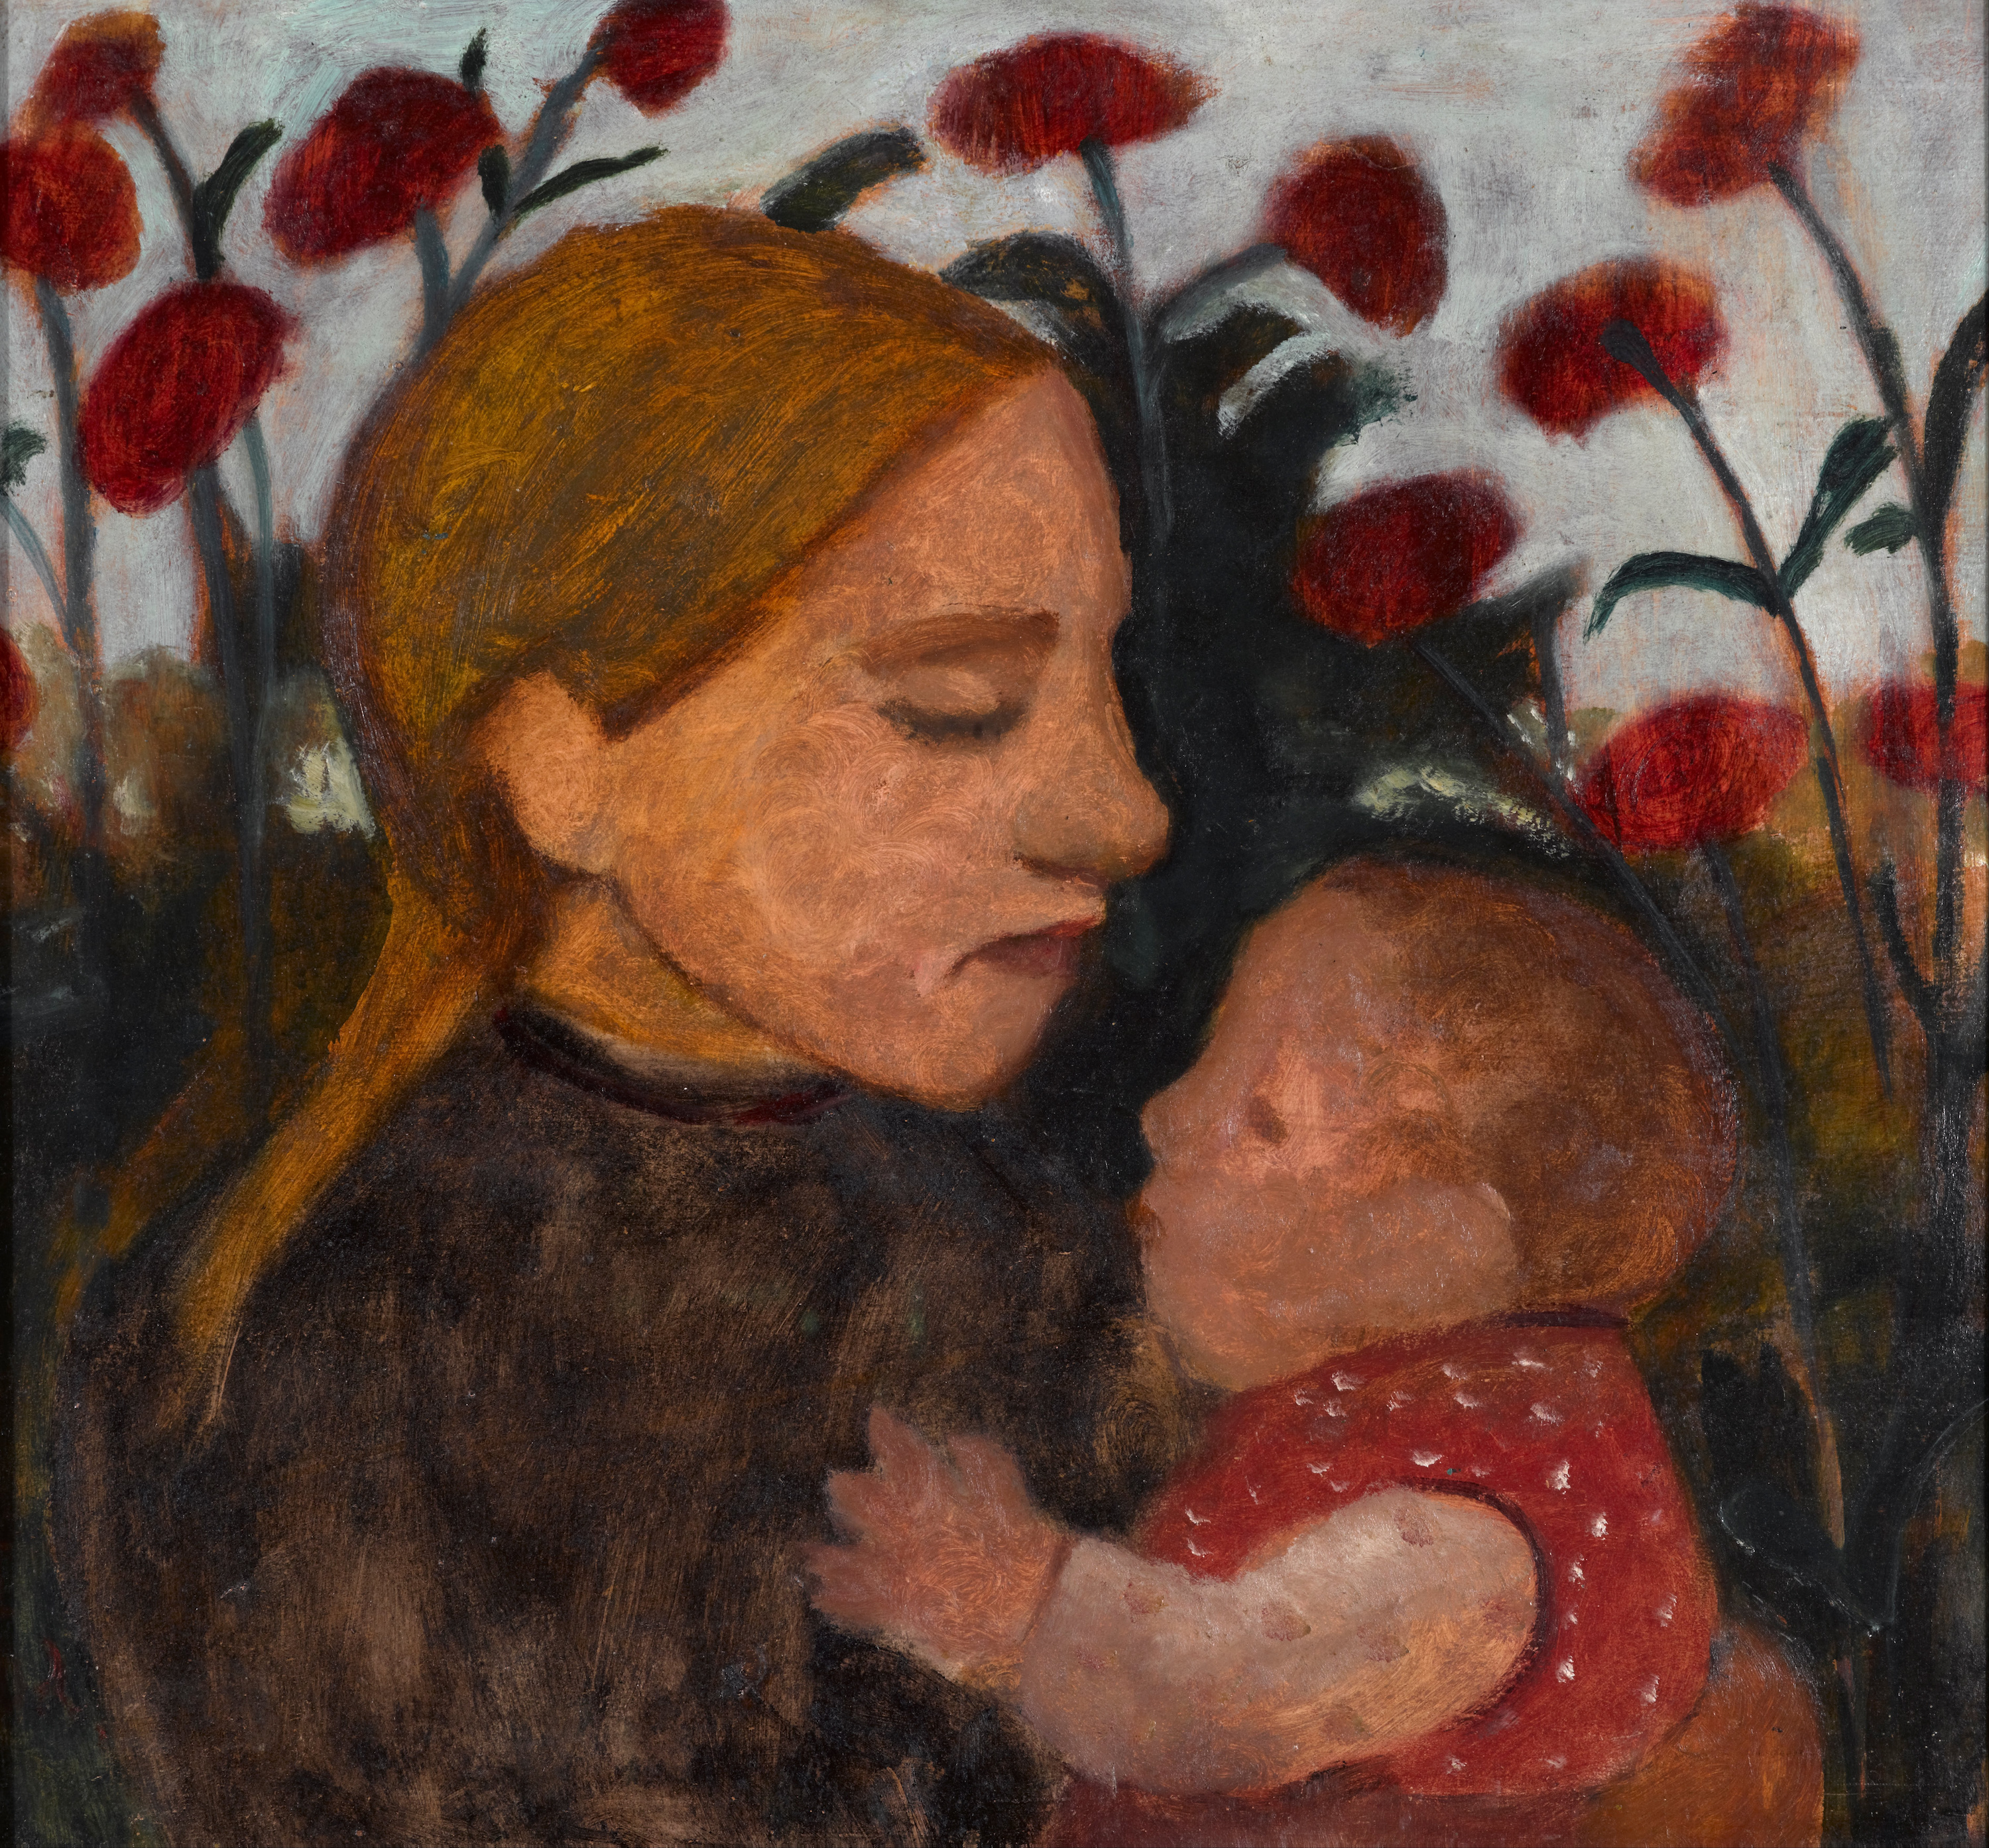 Meisje met kind by Paula Modersohn-Becker - 1902 - 71 x 66.3 cm Kunstmuseum Den Haag